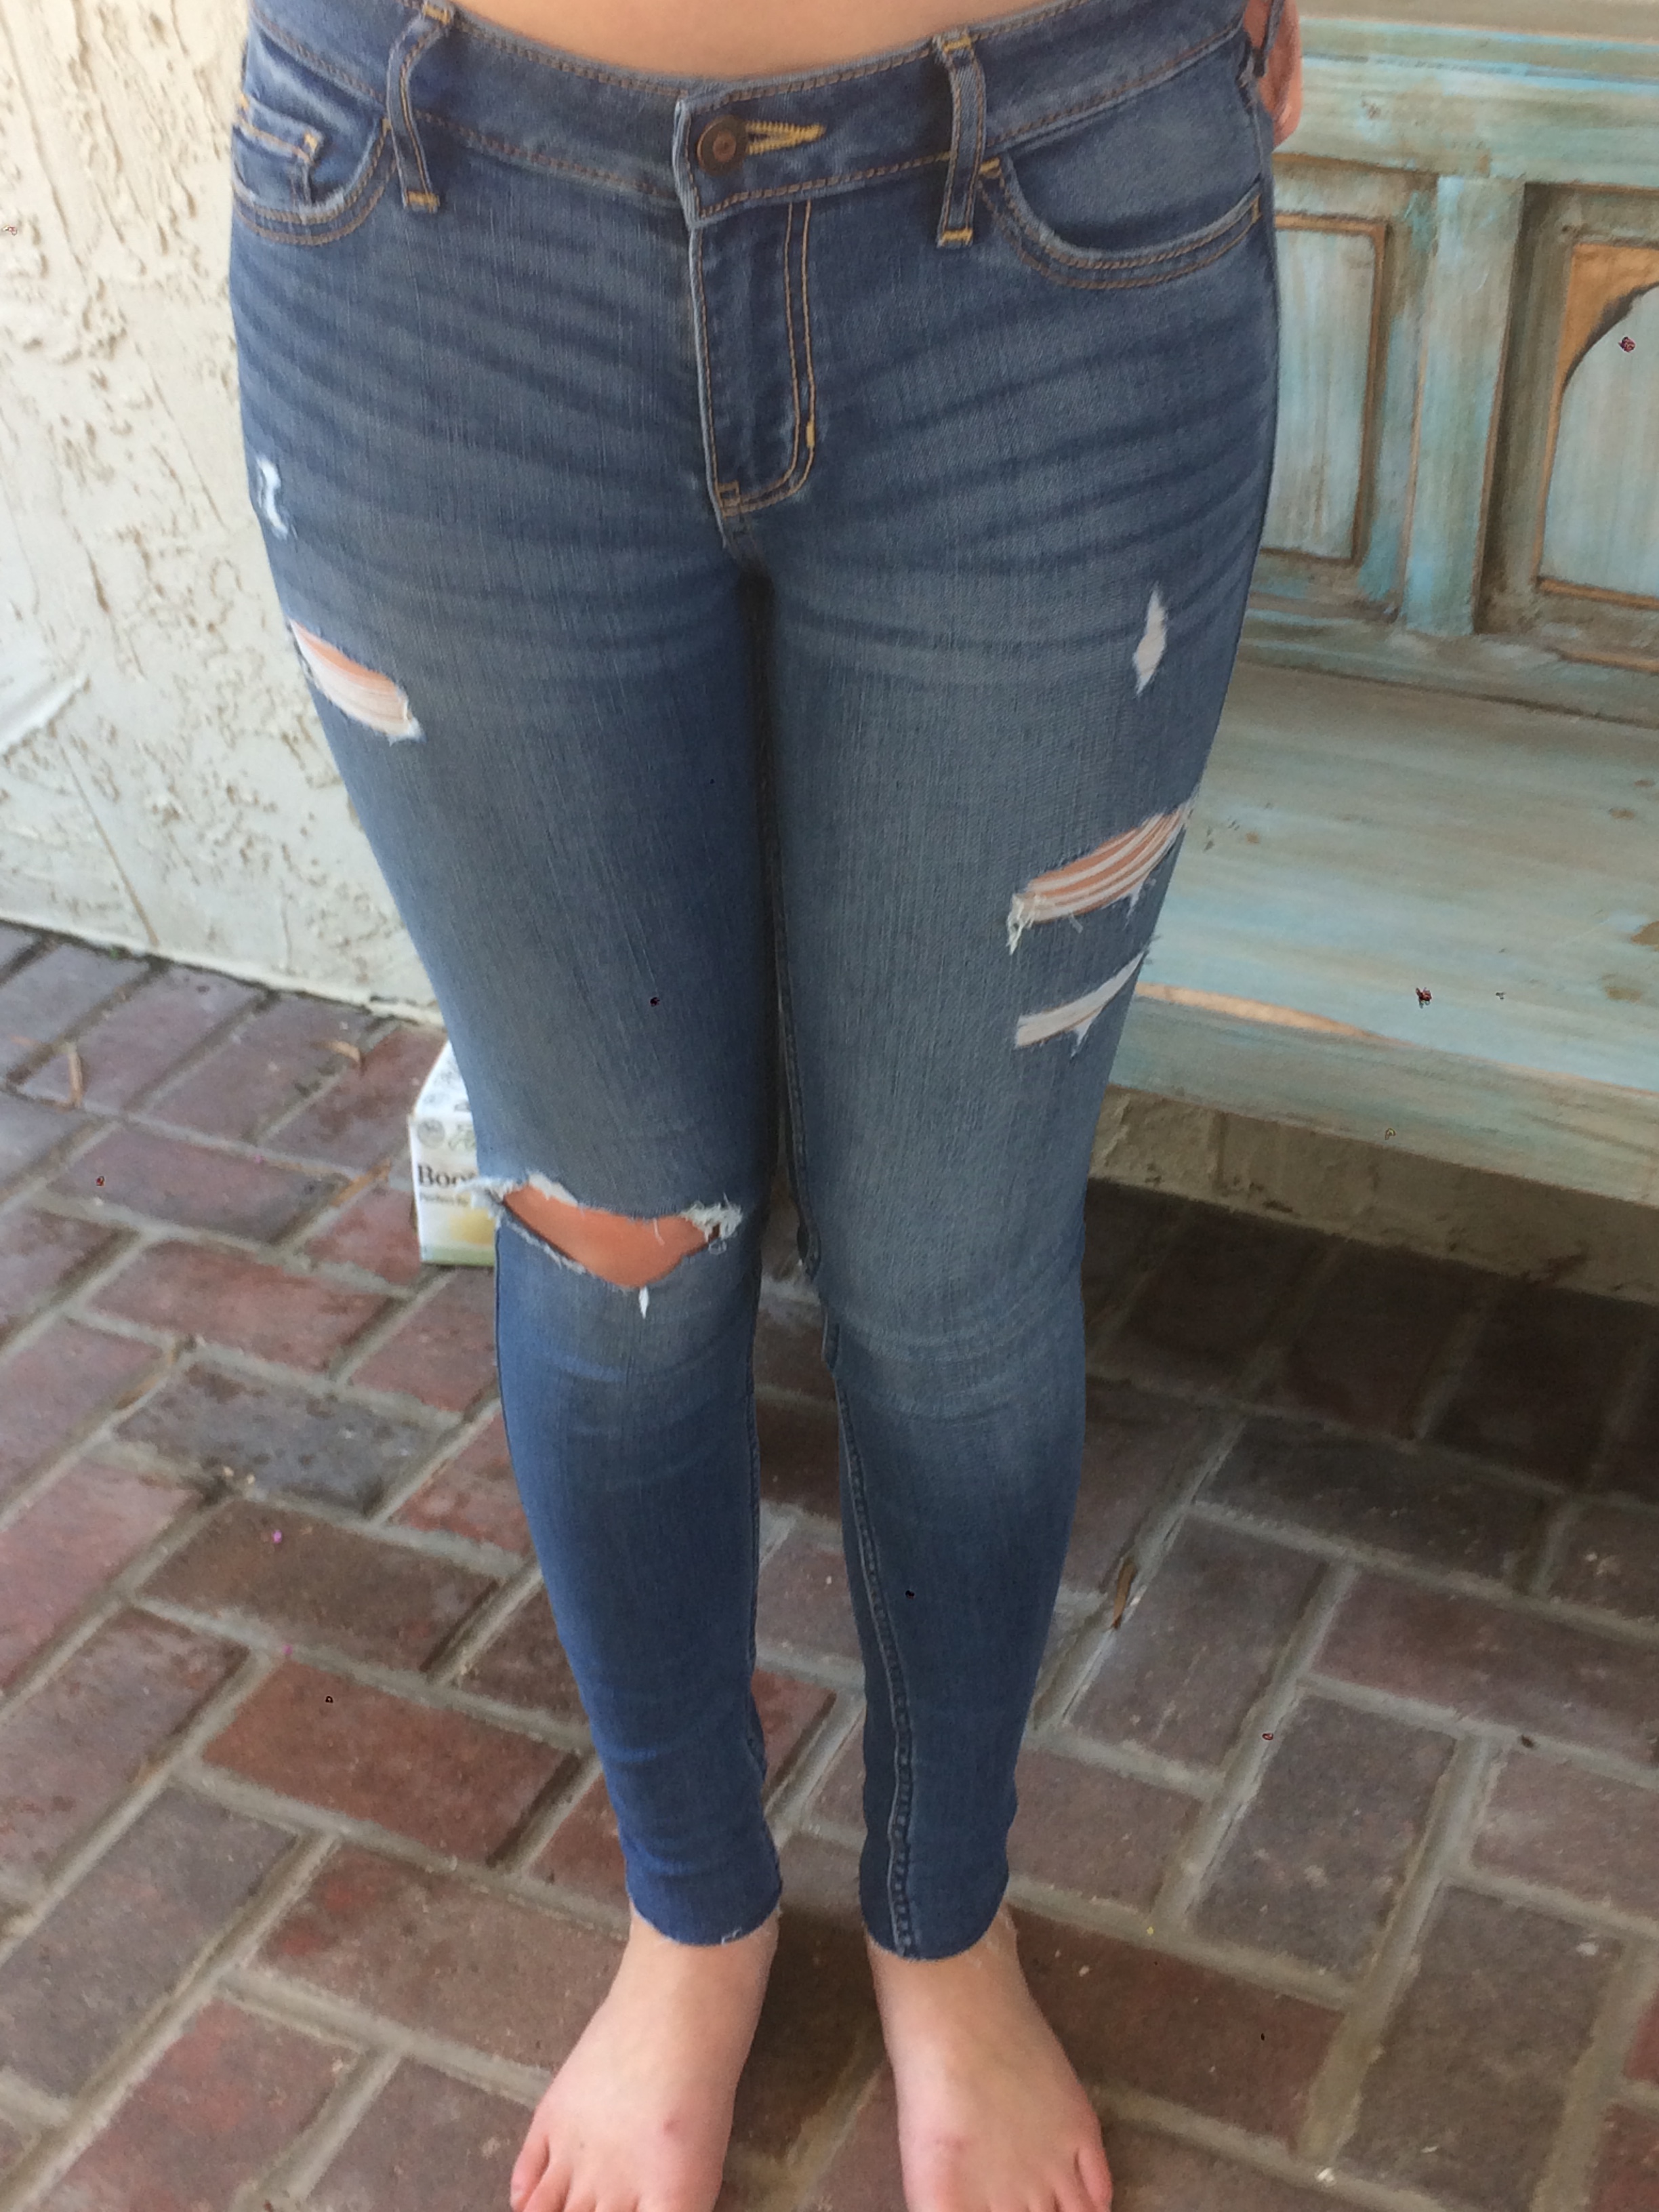 Hollister Jeans